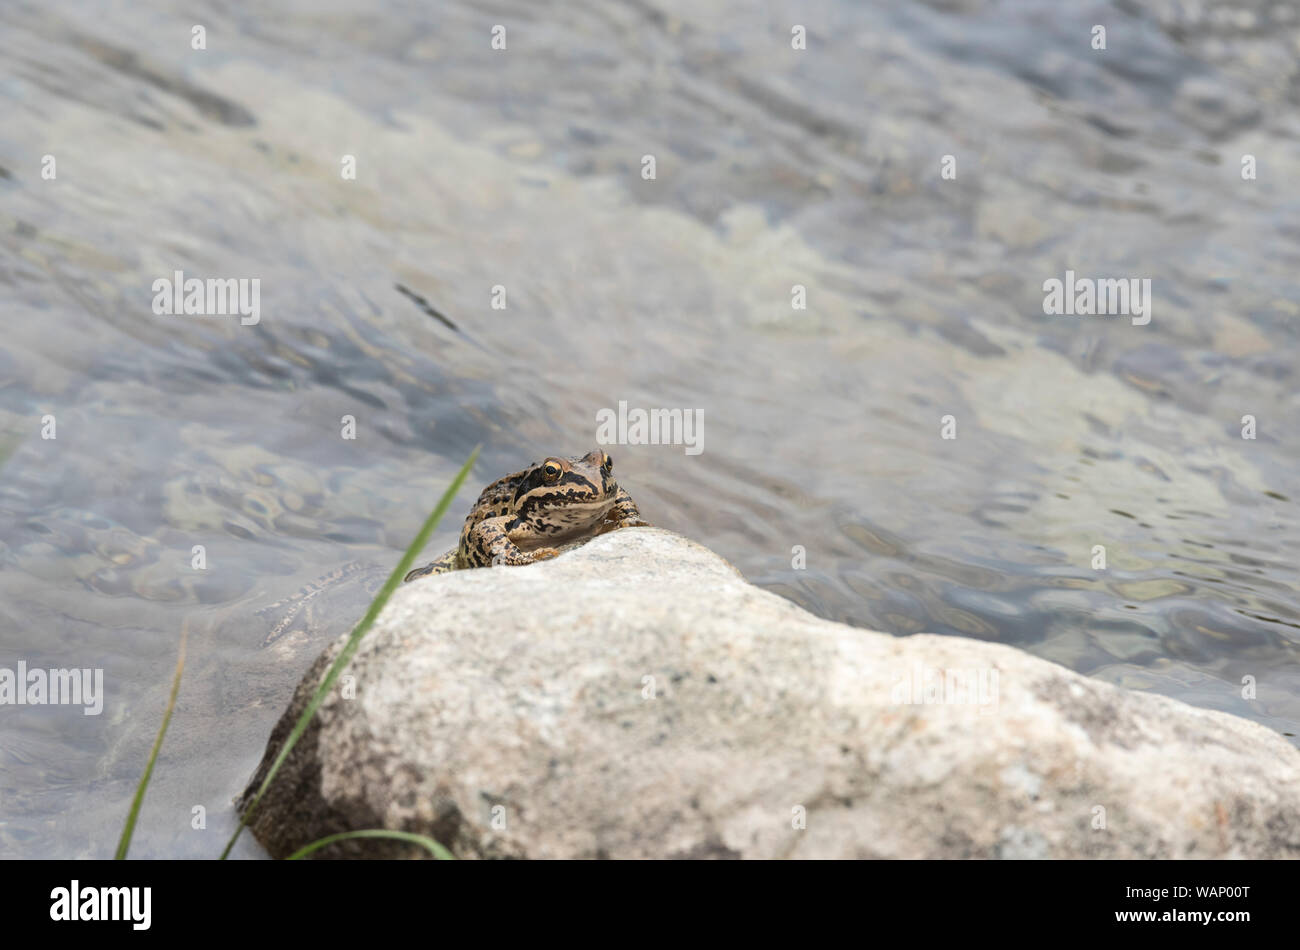 Langbeinige Holz Frosch/Kaukasus Frosch (Rana macrocnemis) Stockfoto